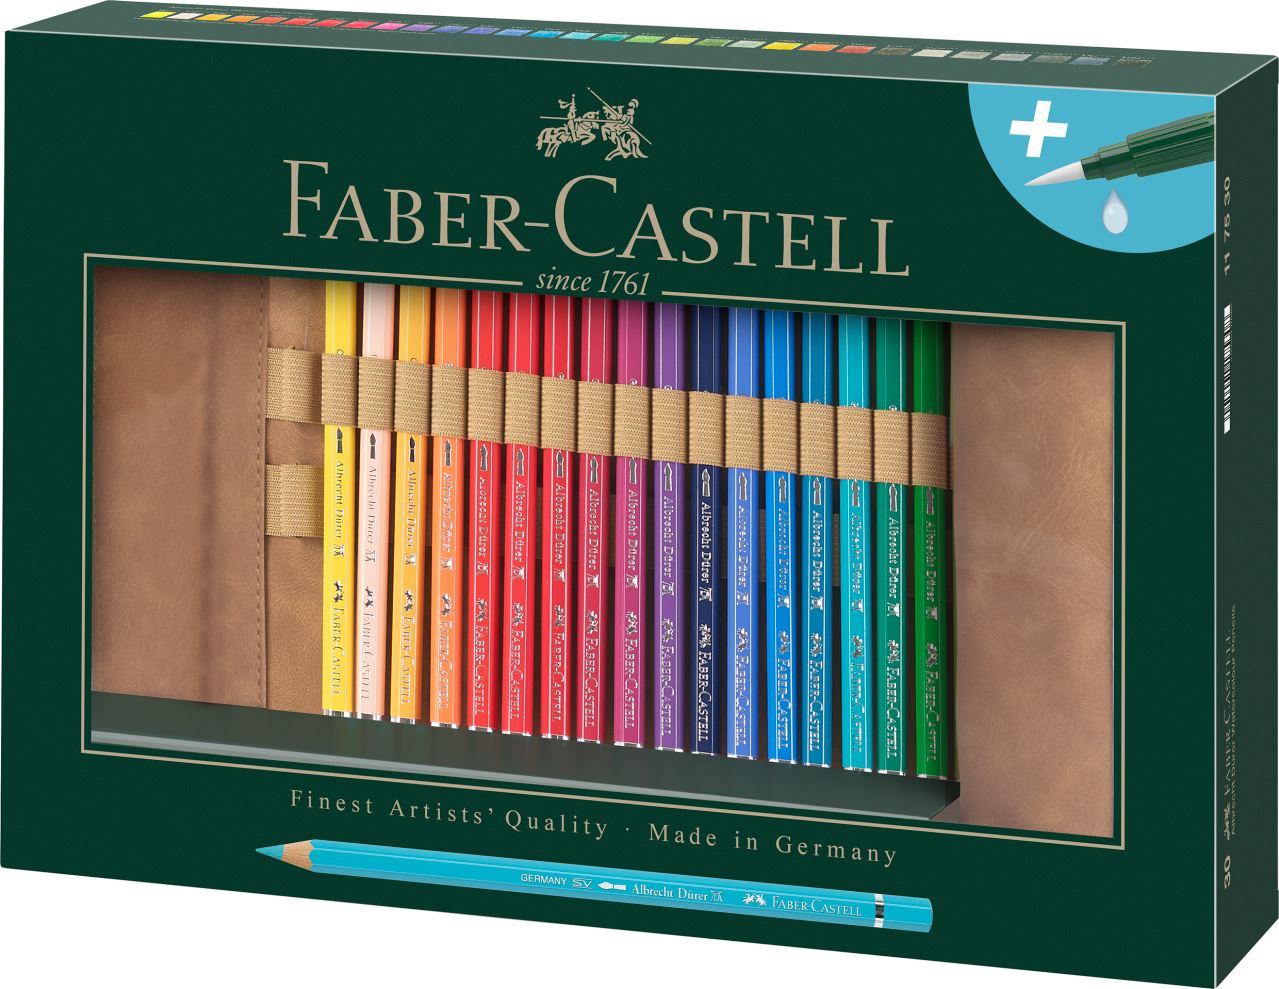 Faber-Castell - Rotolo con matite colorate acquerellabili Albrecht Dürer